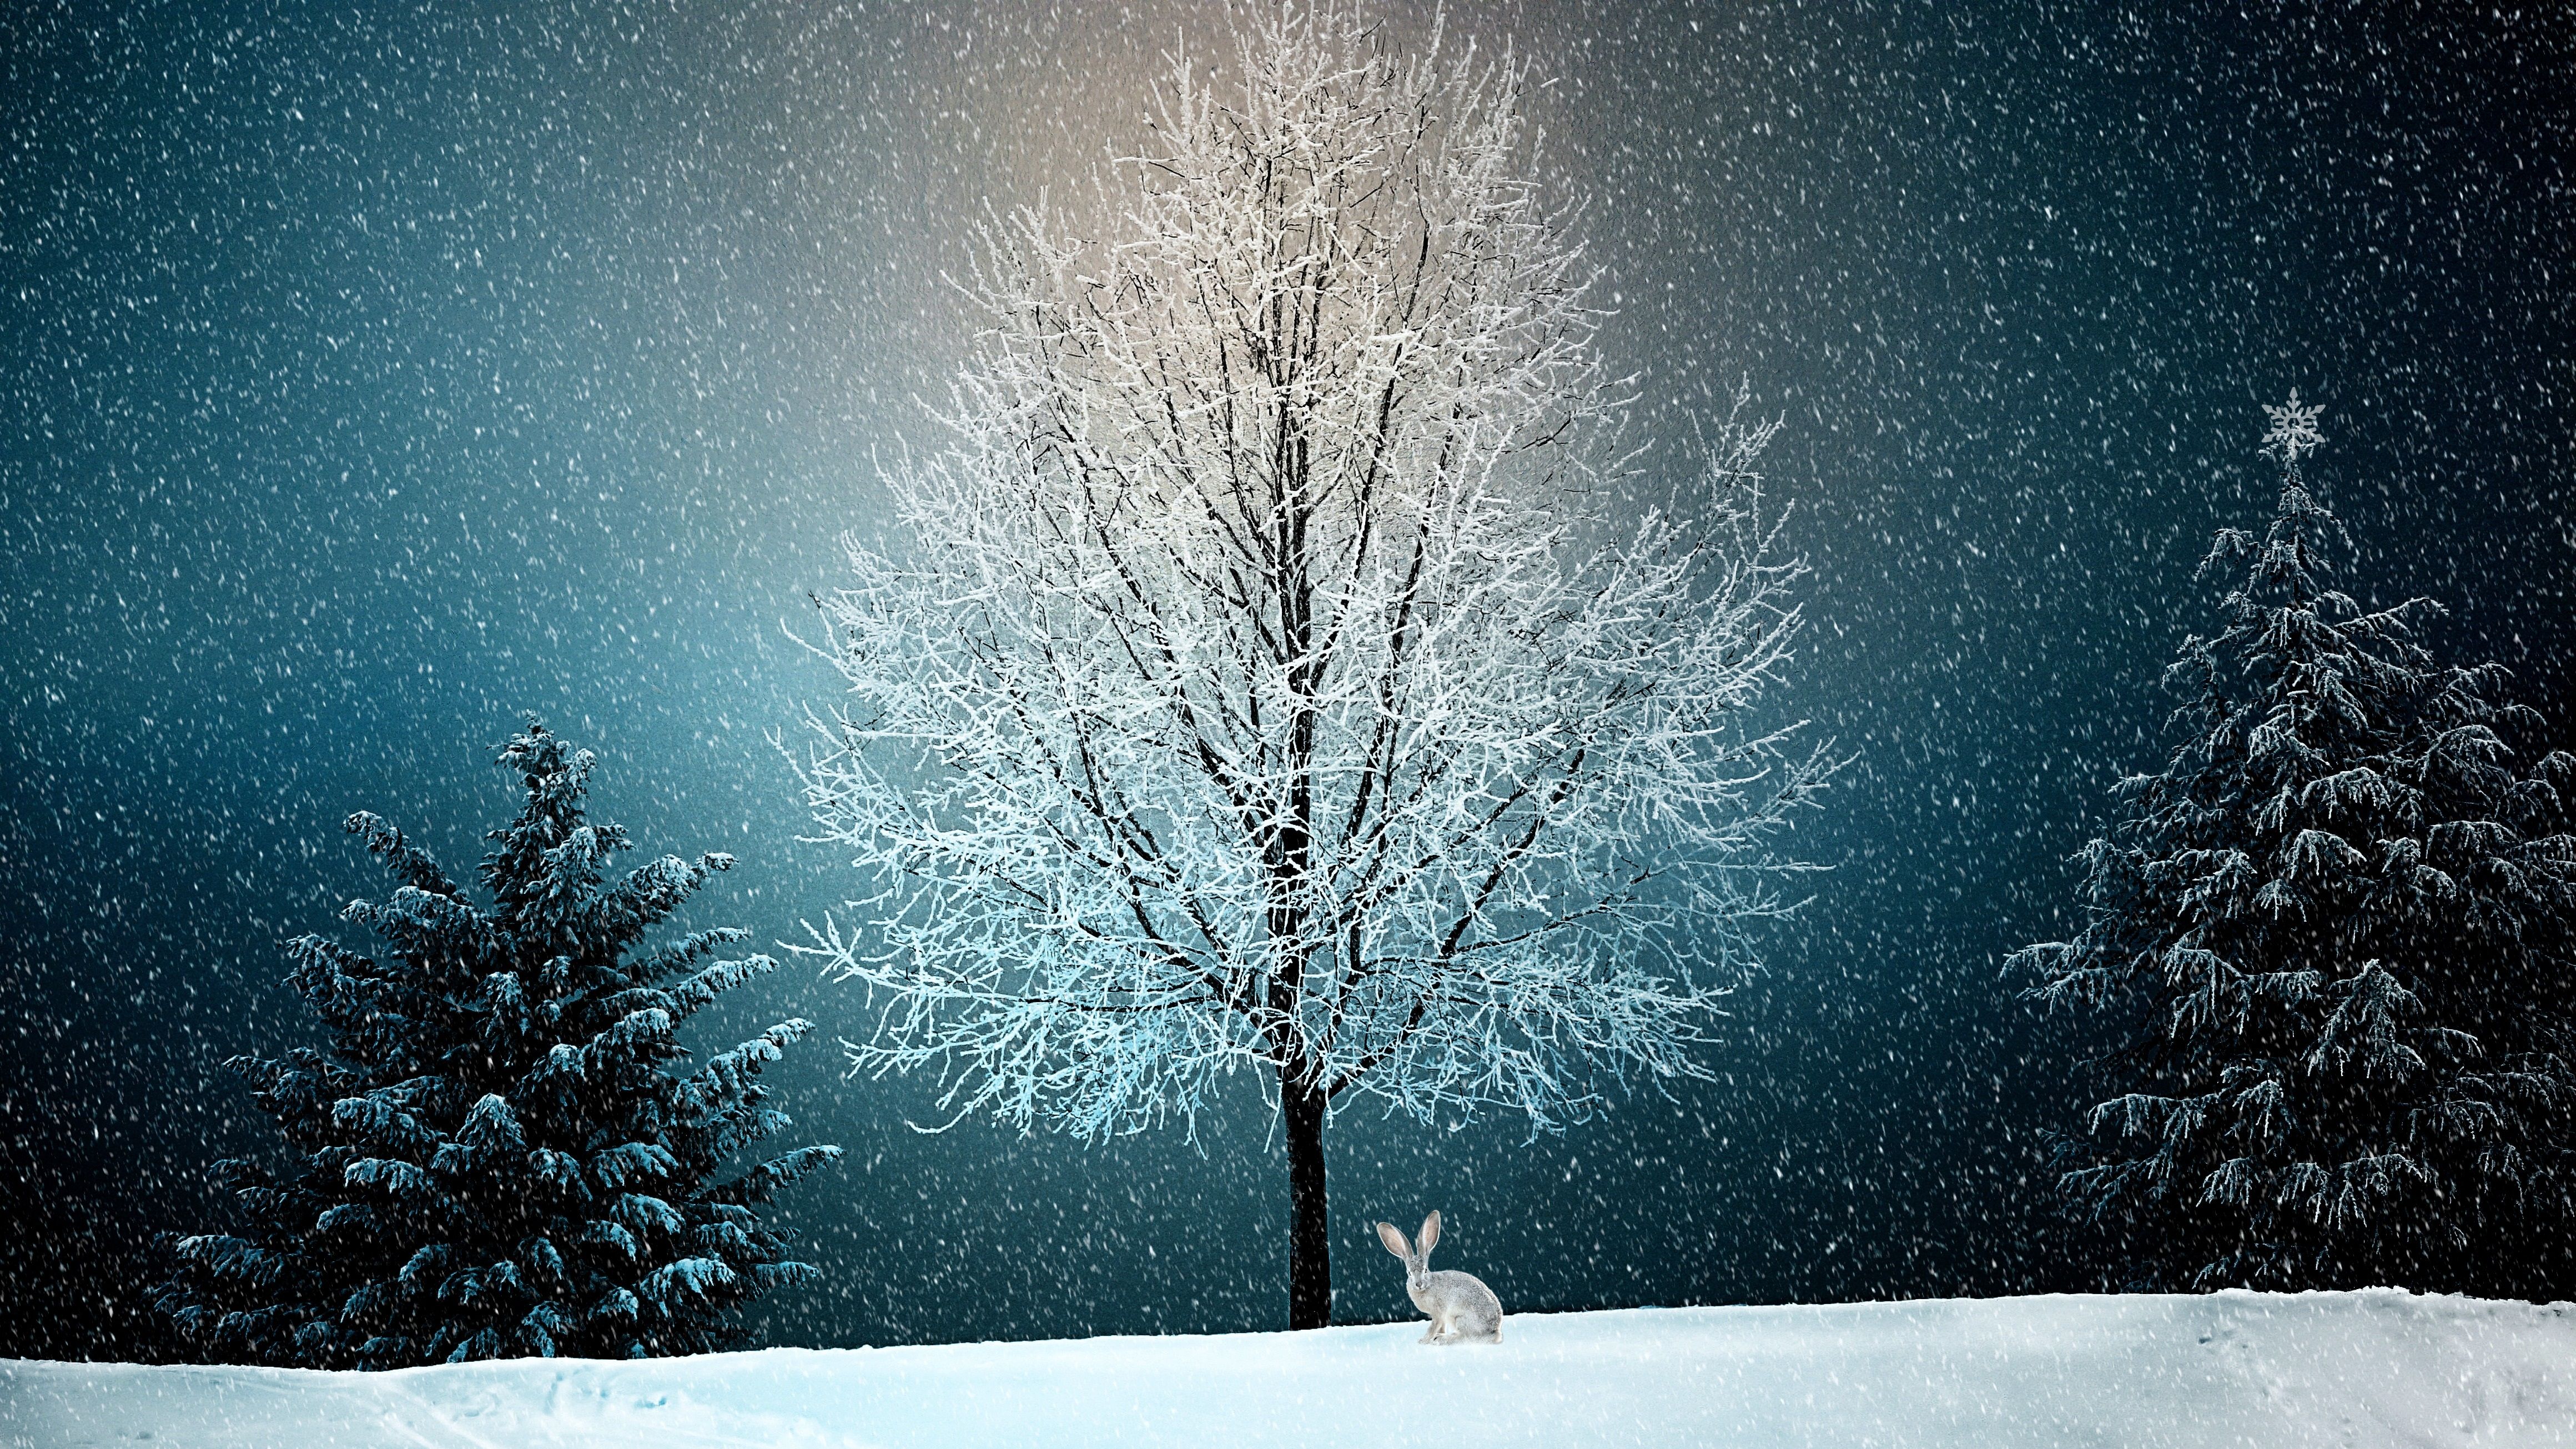 Winter Snow Background Image